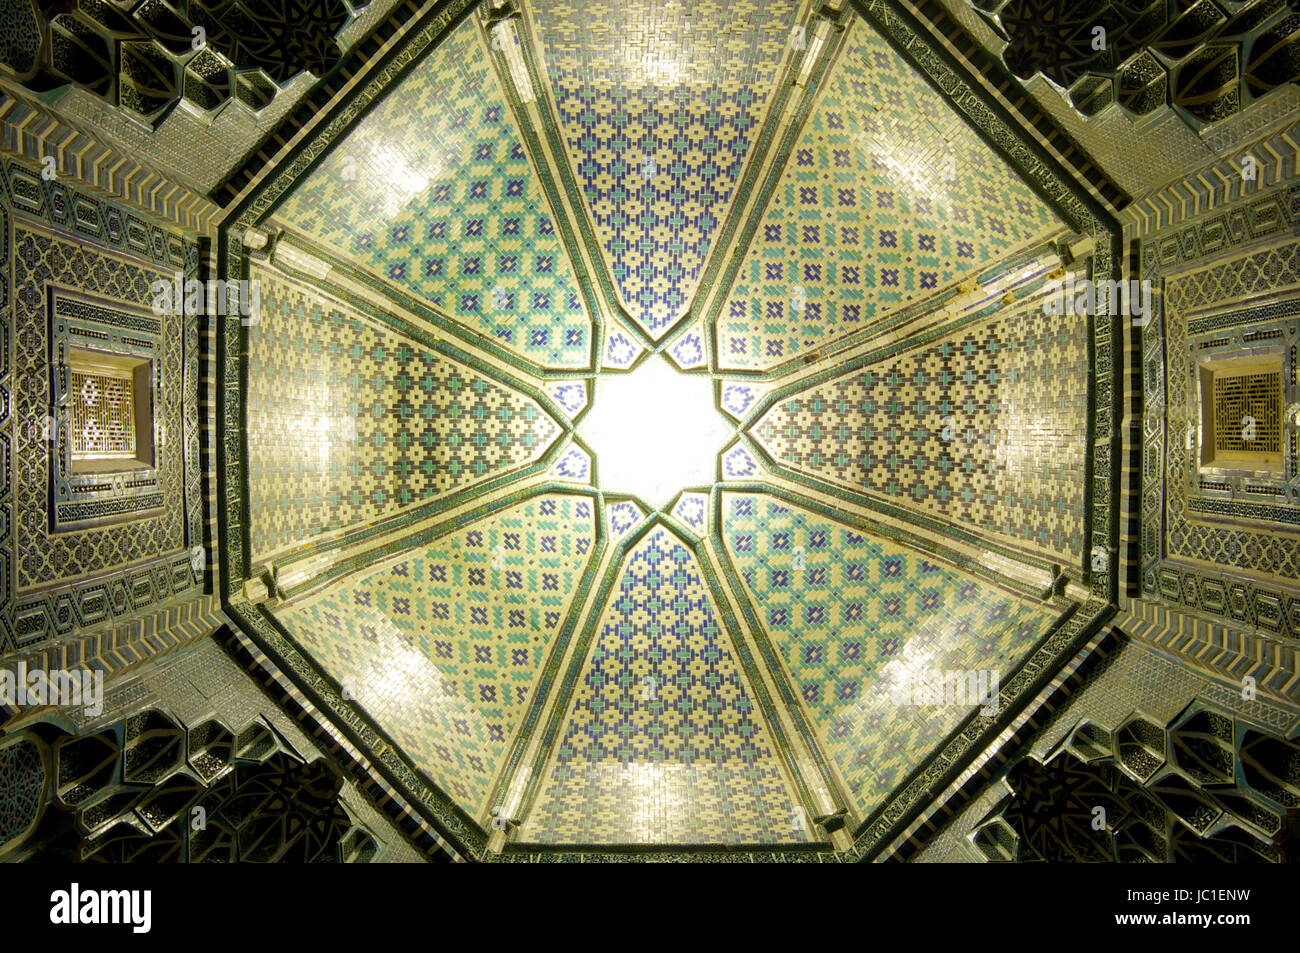 Sun illuminating the mosaic in the ceiling, Samarkand Stock Photo